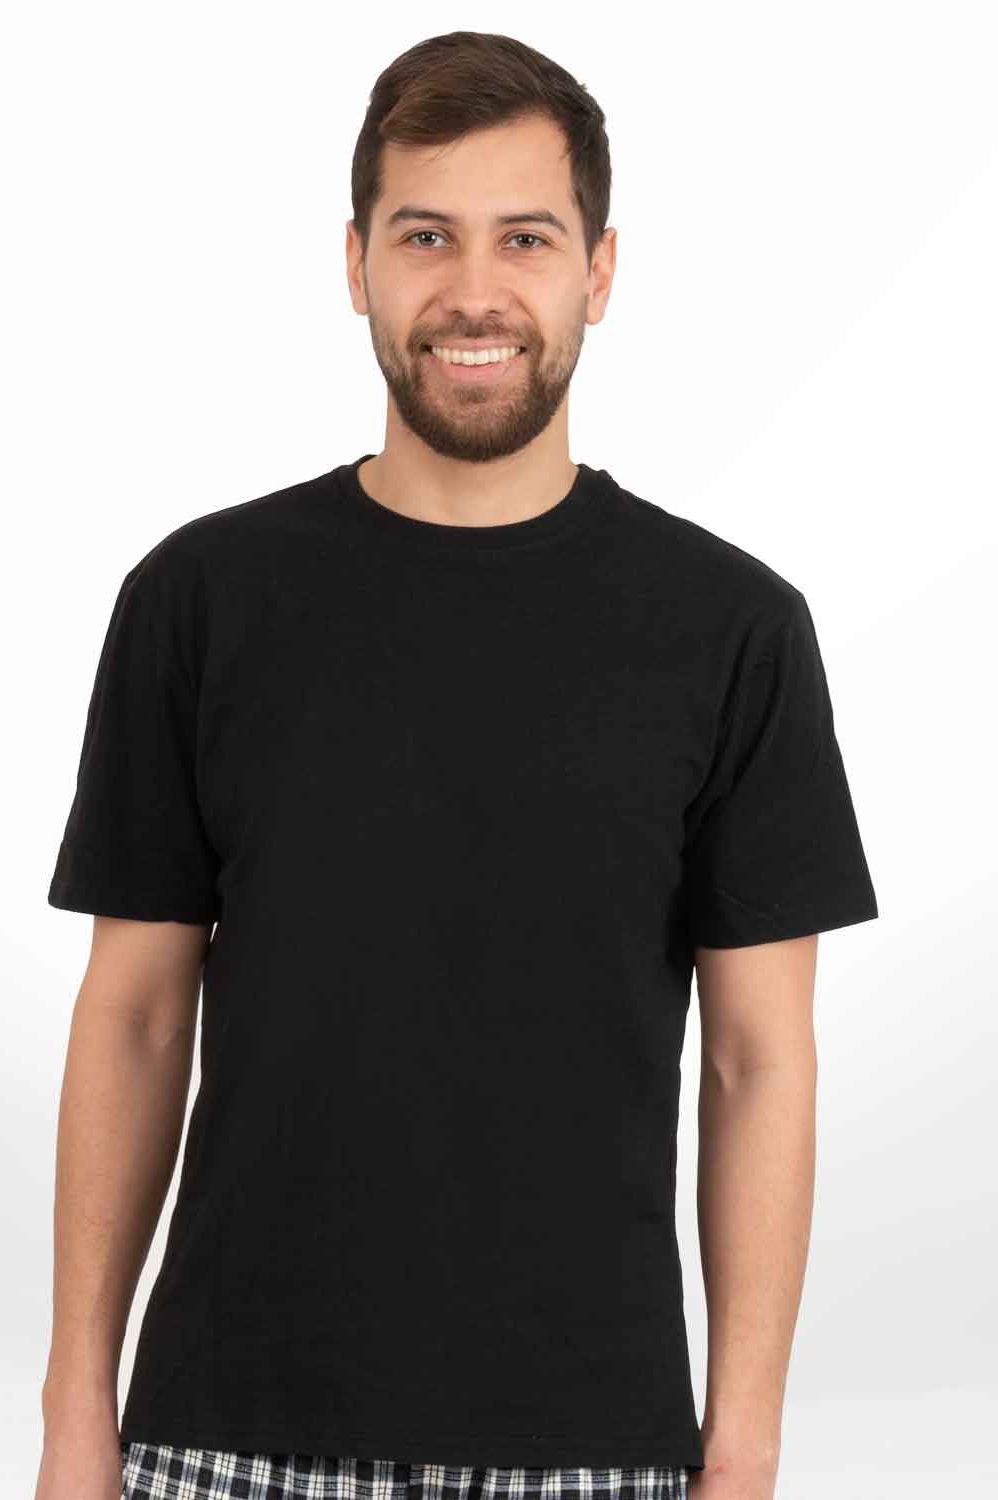 100% Cotton, short sleeve, crew neck t-shirt - Black